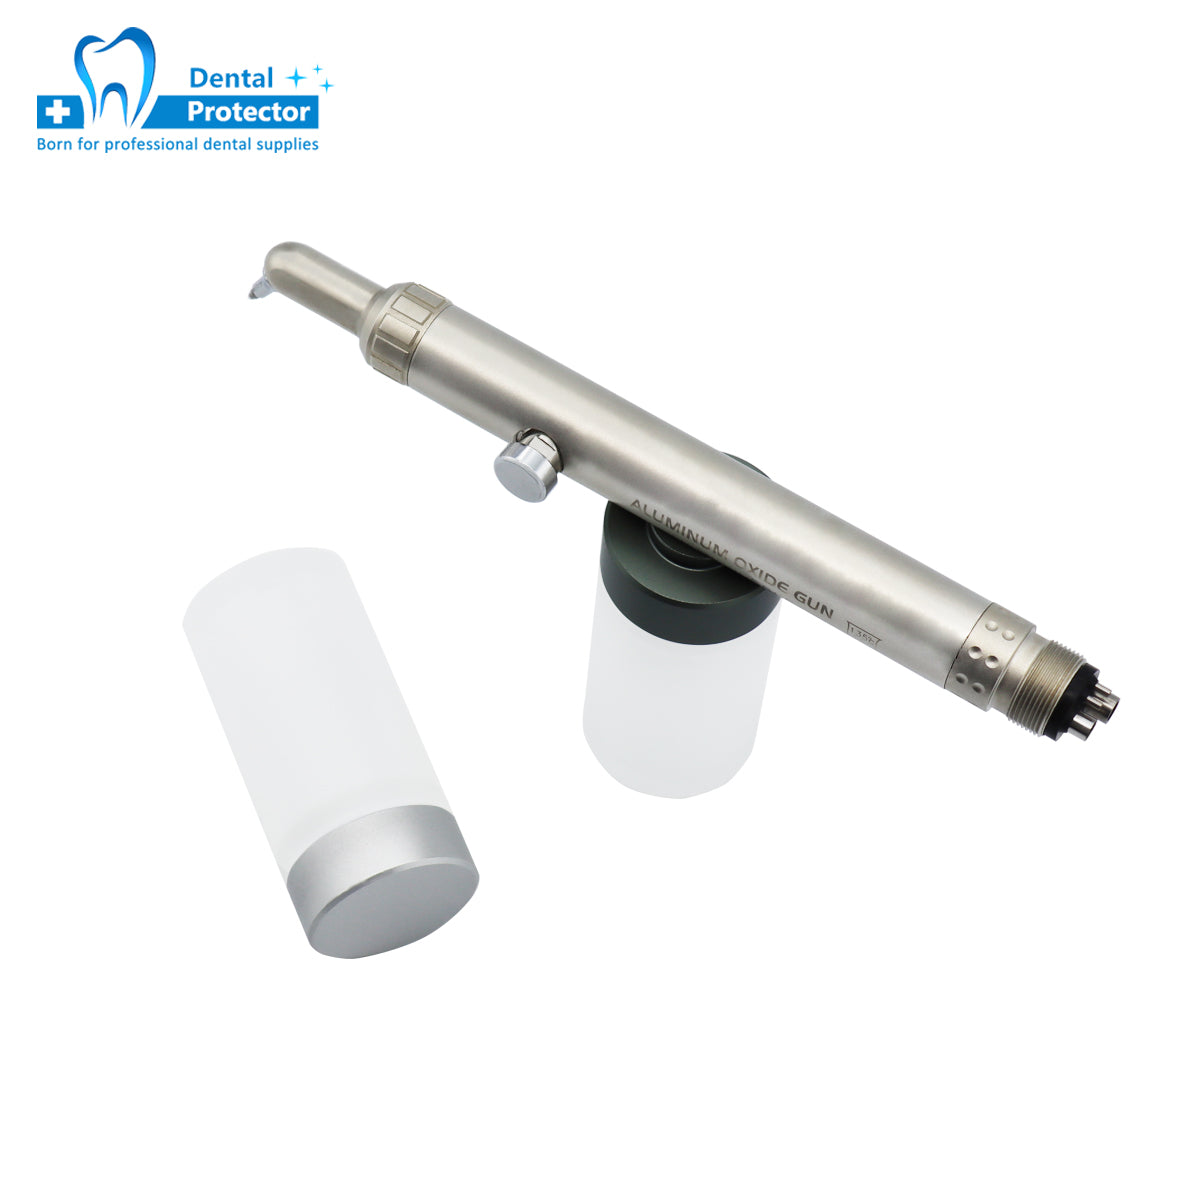 Dental Cooling Aluminum Oxide Micro blaster Air Abrasion Polisher Sandblasting Sandblaster